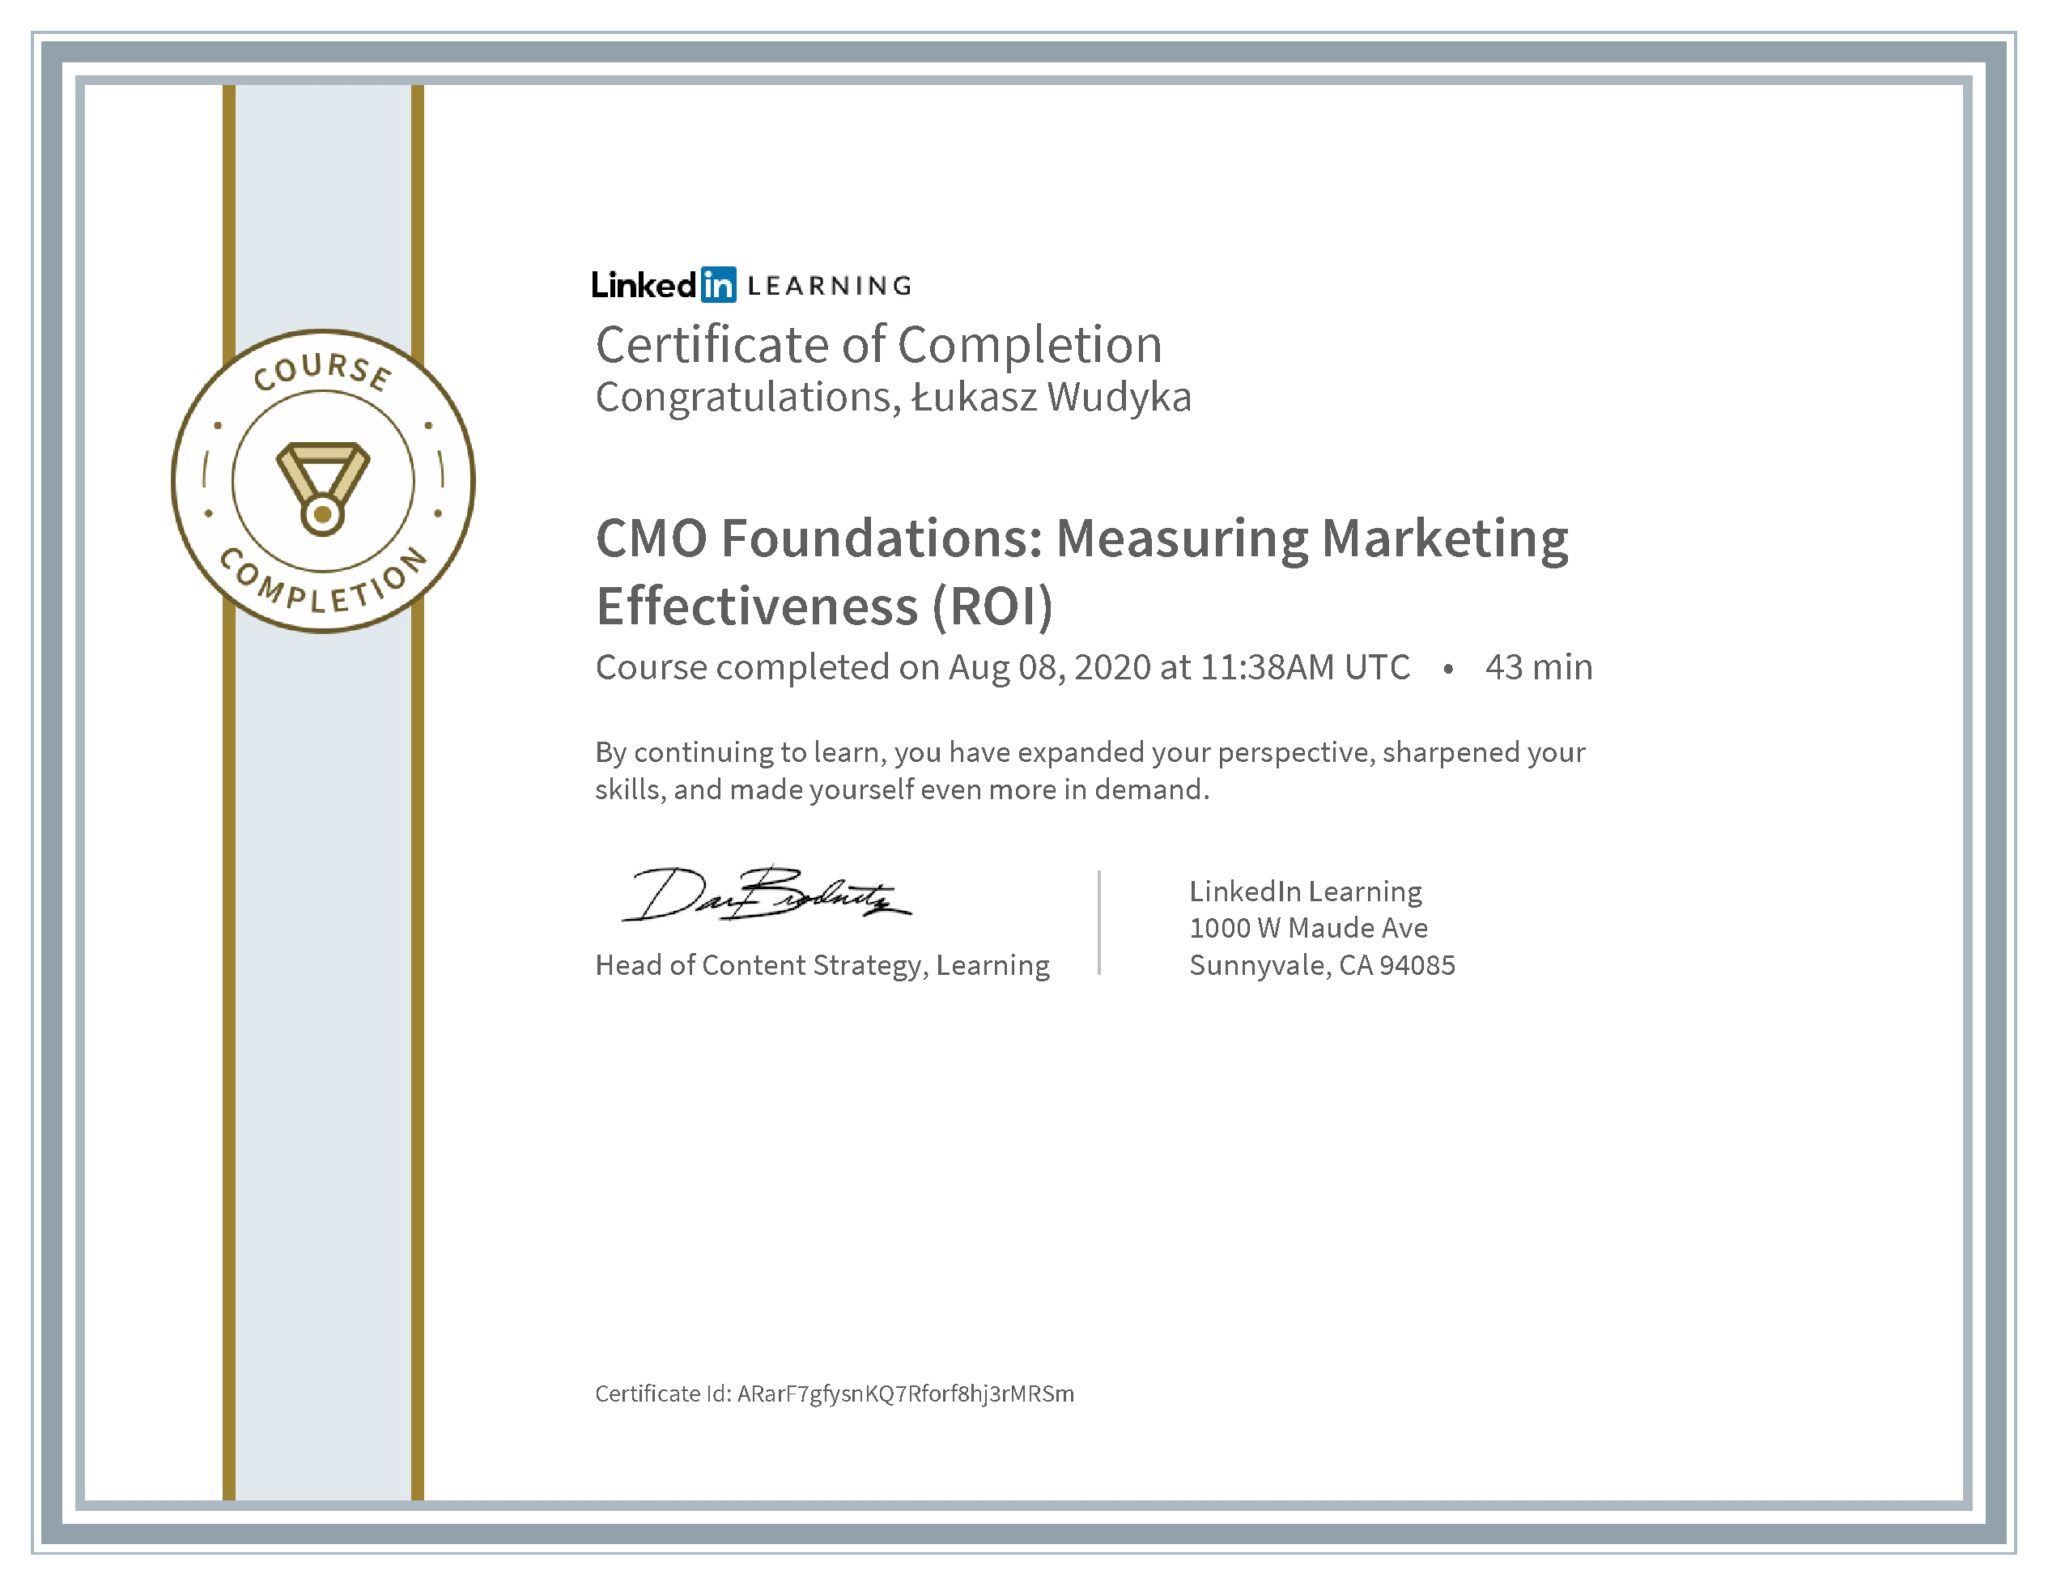 Łukasz Wudyka certyfikat LinkedIn CMO Foundations: Measuring Marketing Effectiveness (ROI)